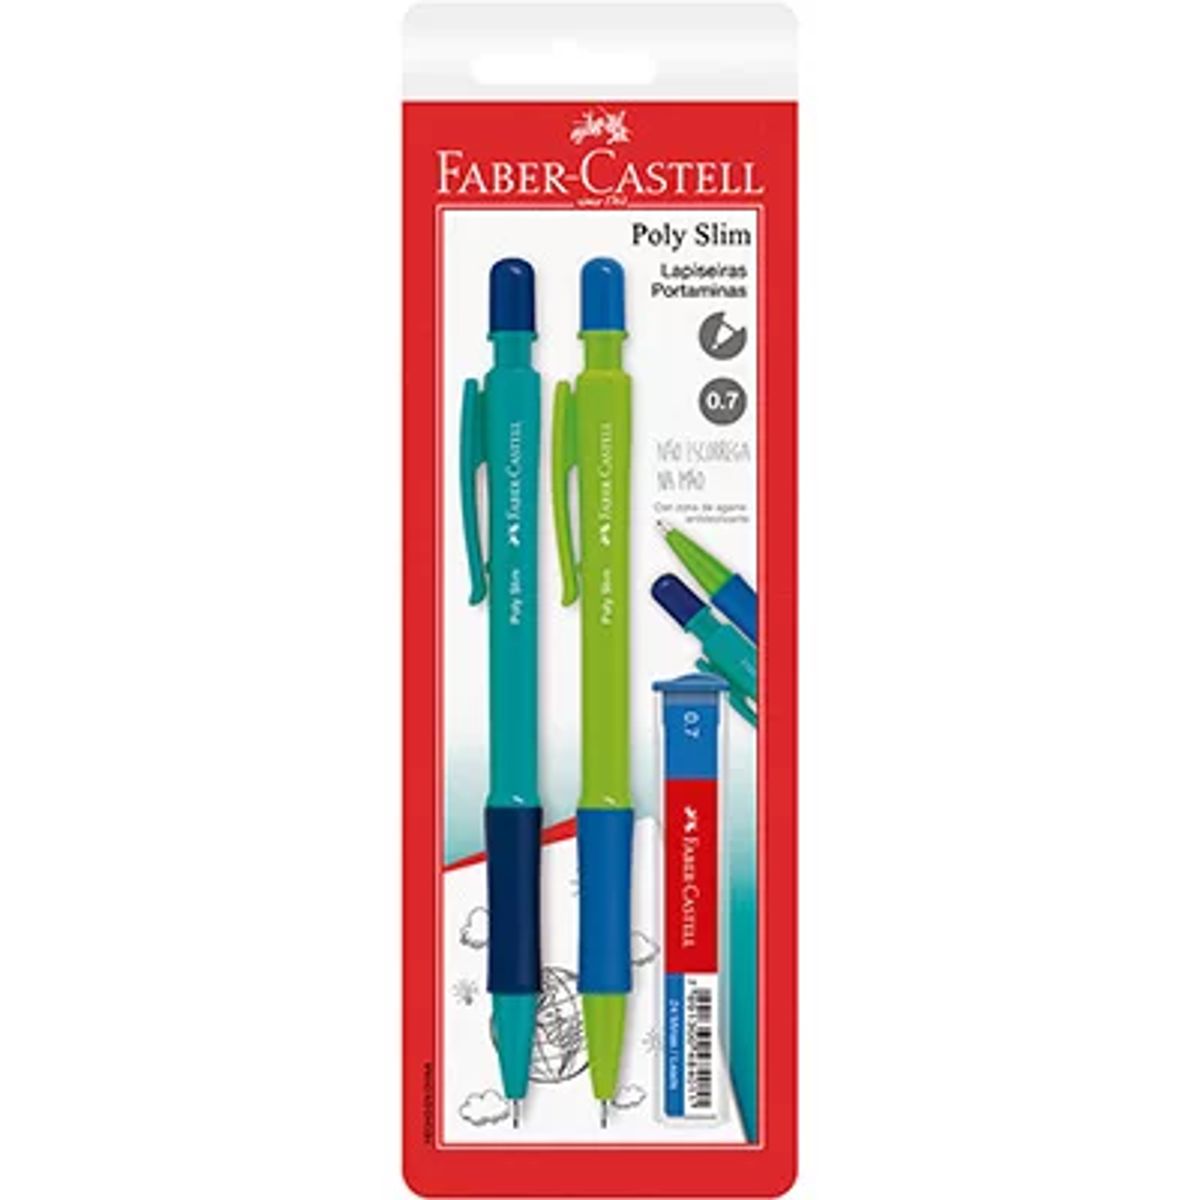 Lapiseira Faber Castell 0.7 + 1 Tubo de Grafite Azul e Verde 2 Unidades